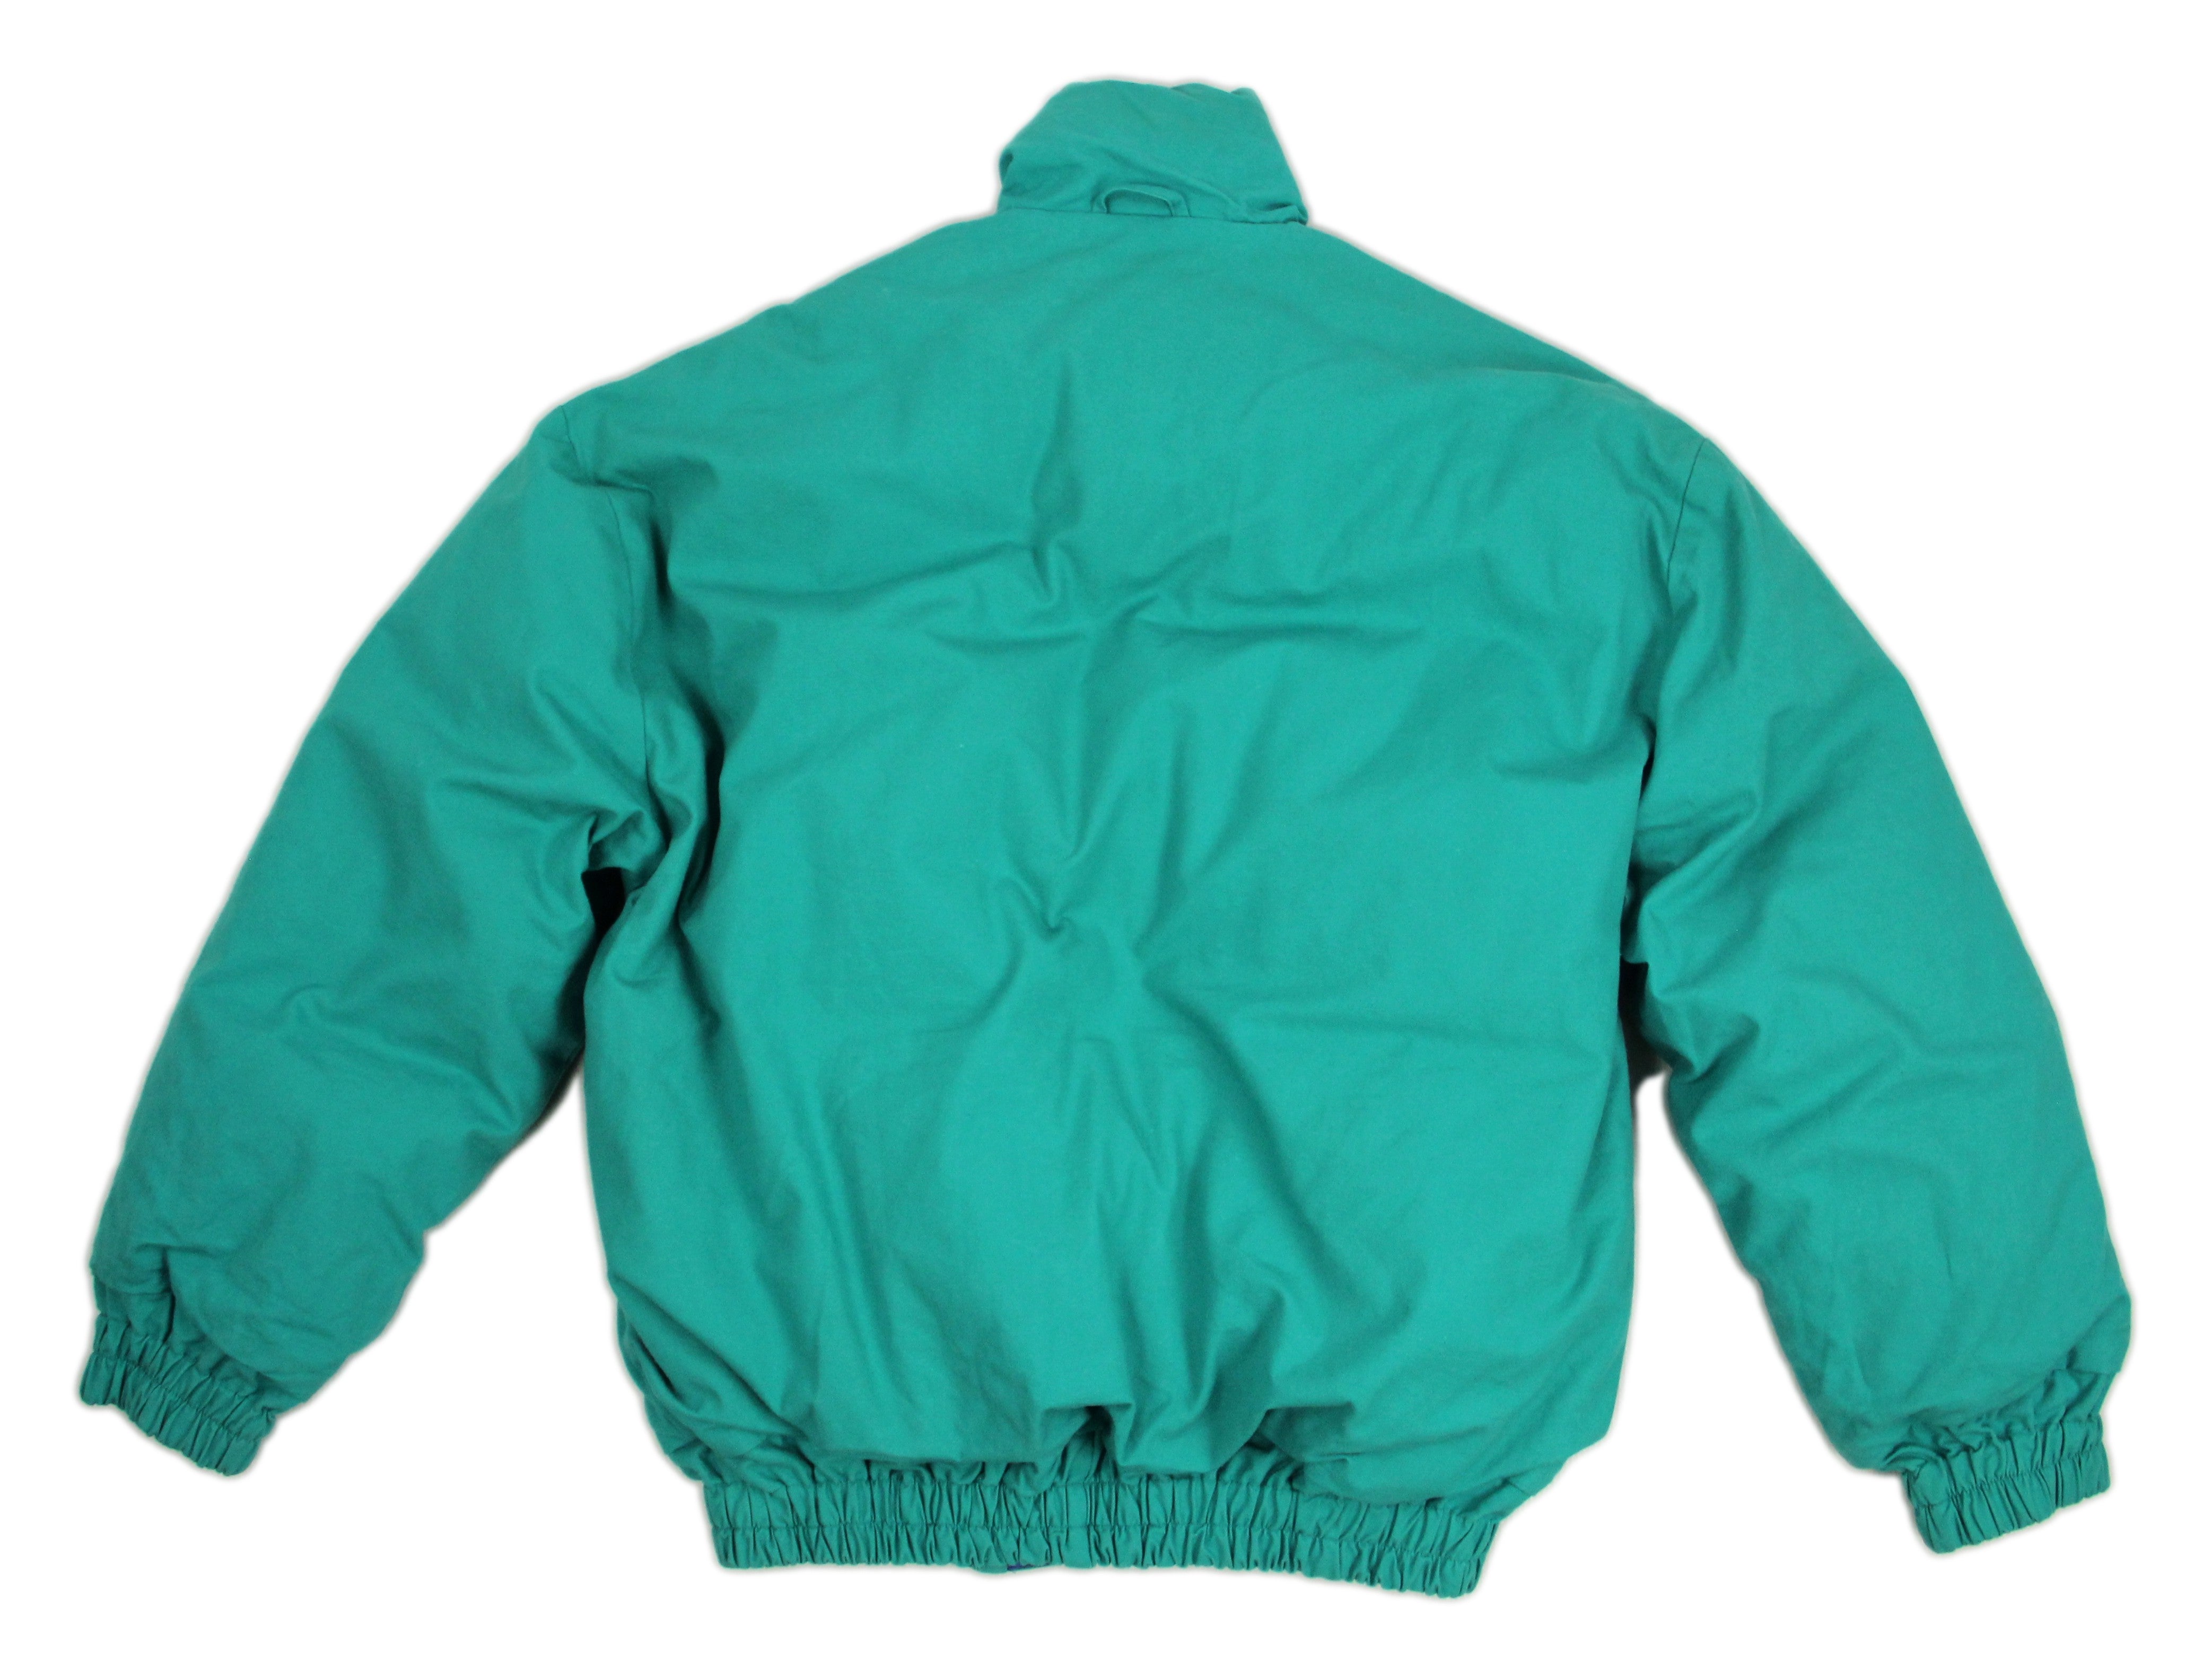 Vinatge Green Cotton Women's Puffer Down Jacket, SIZE M